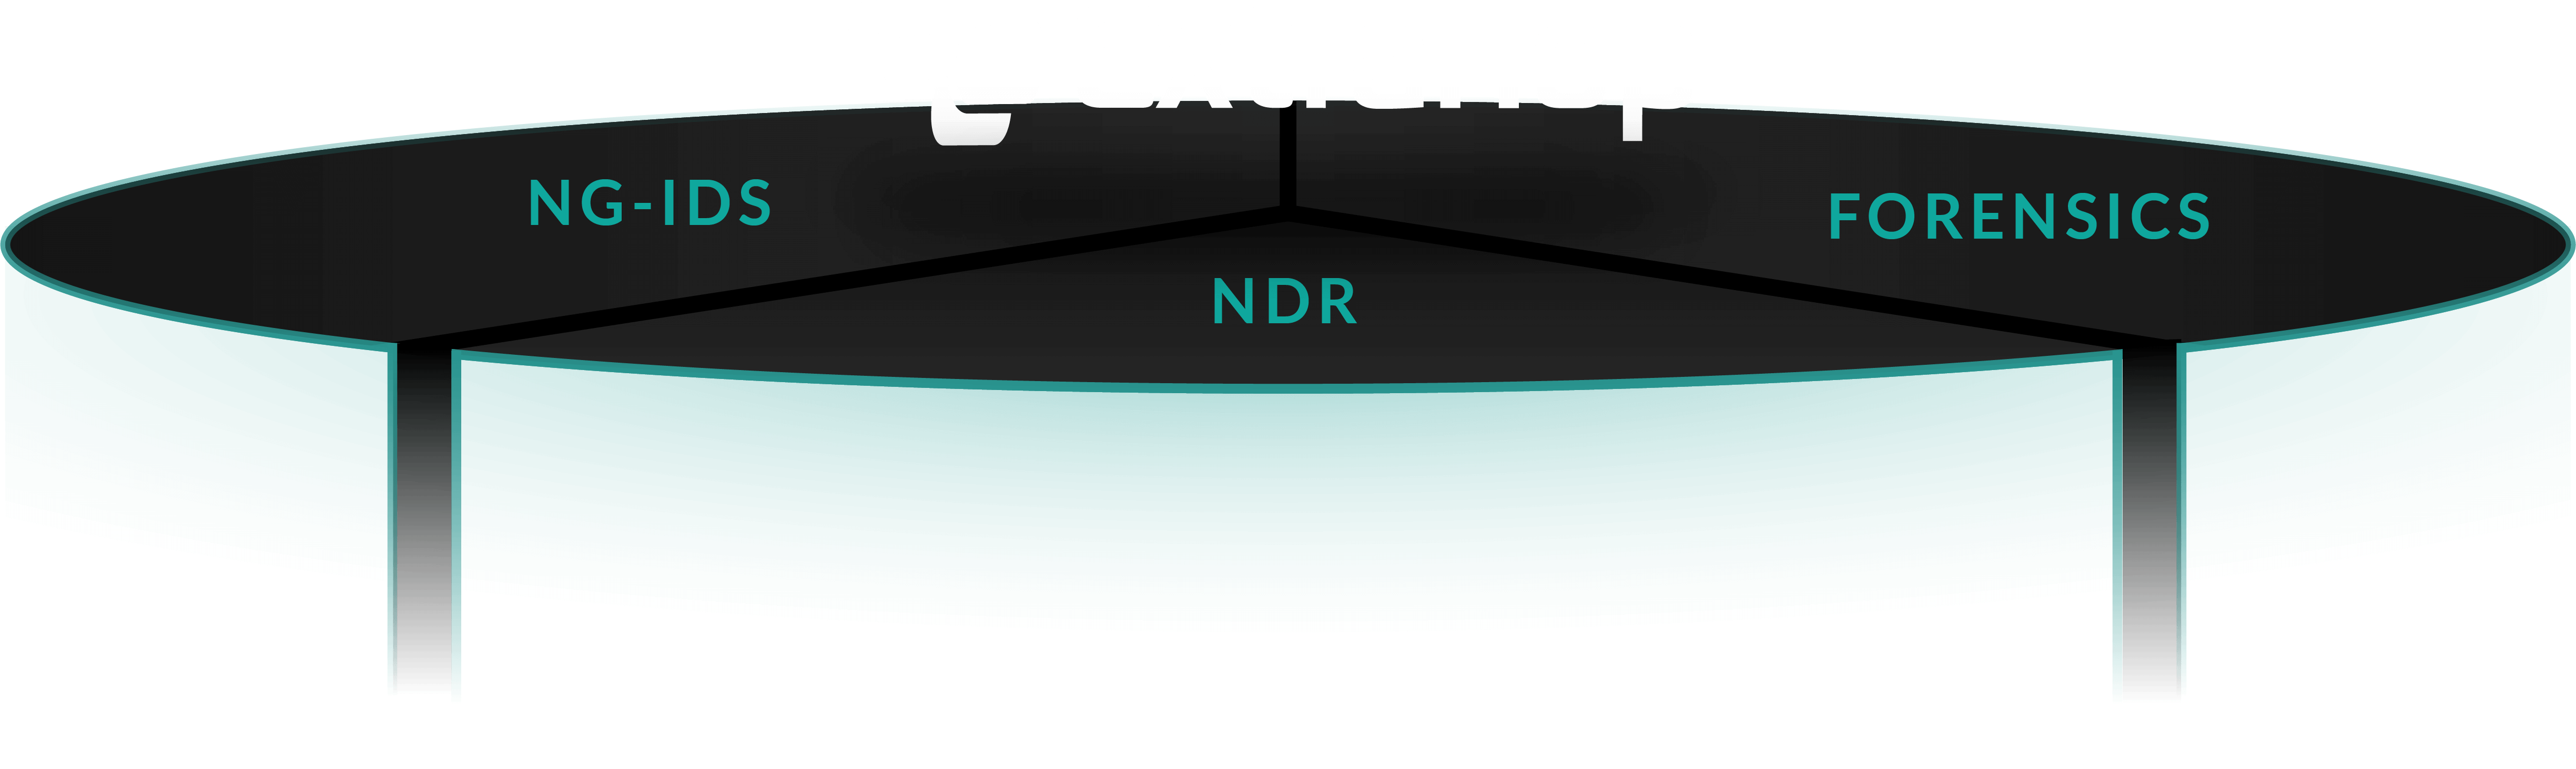 ExtraHop：次世代IDS、NDR、フォレンジック